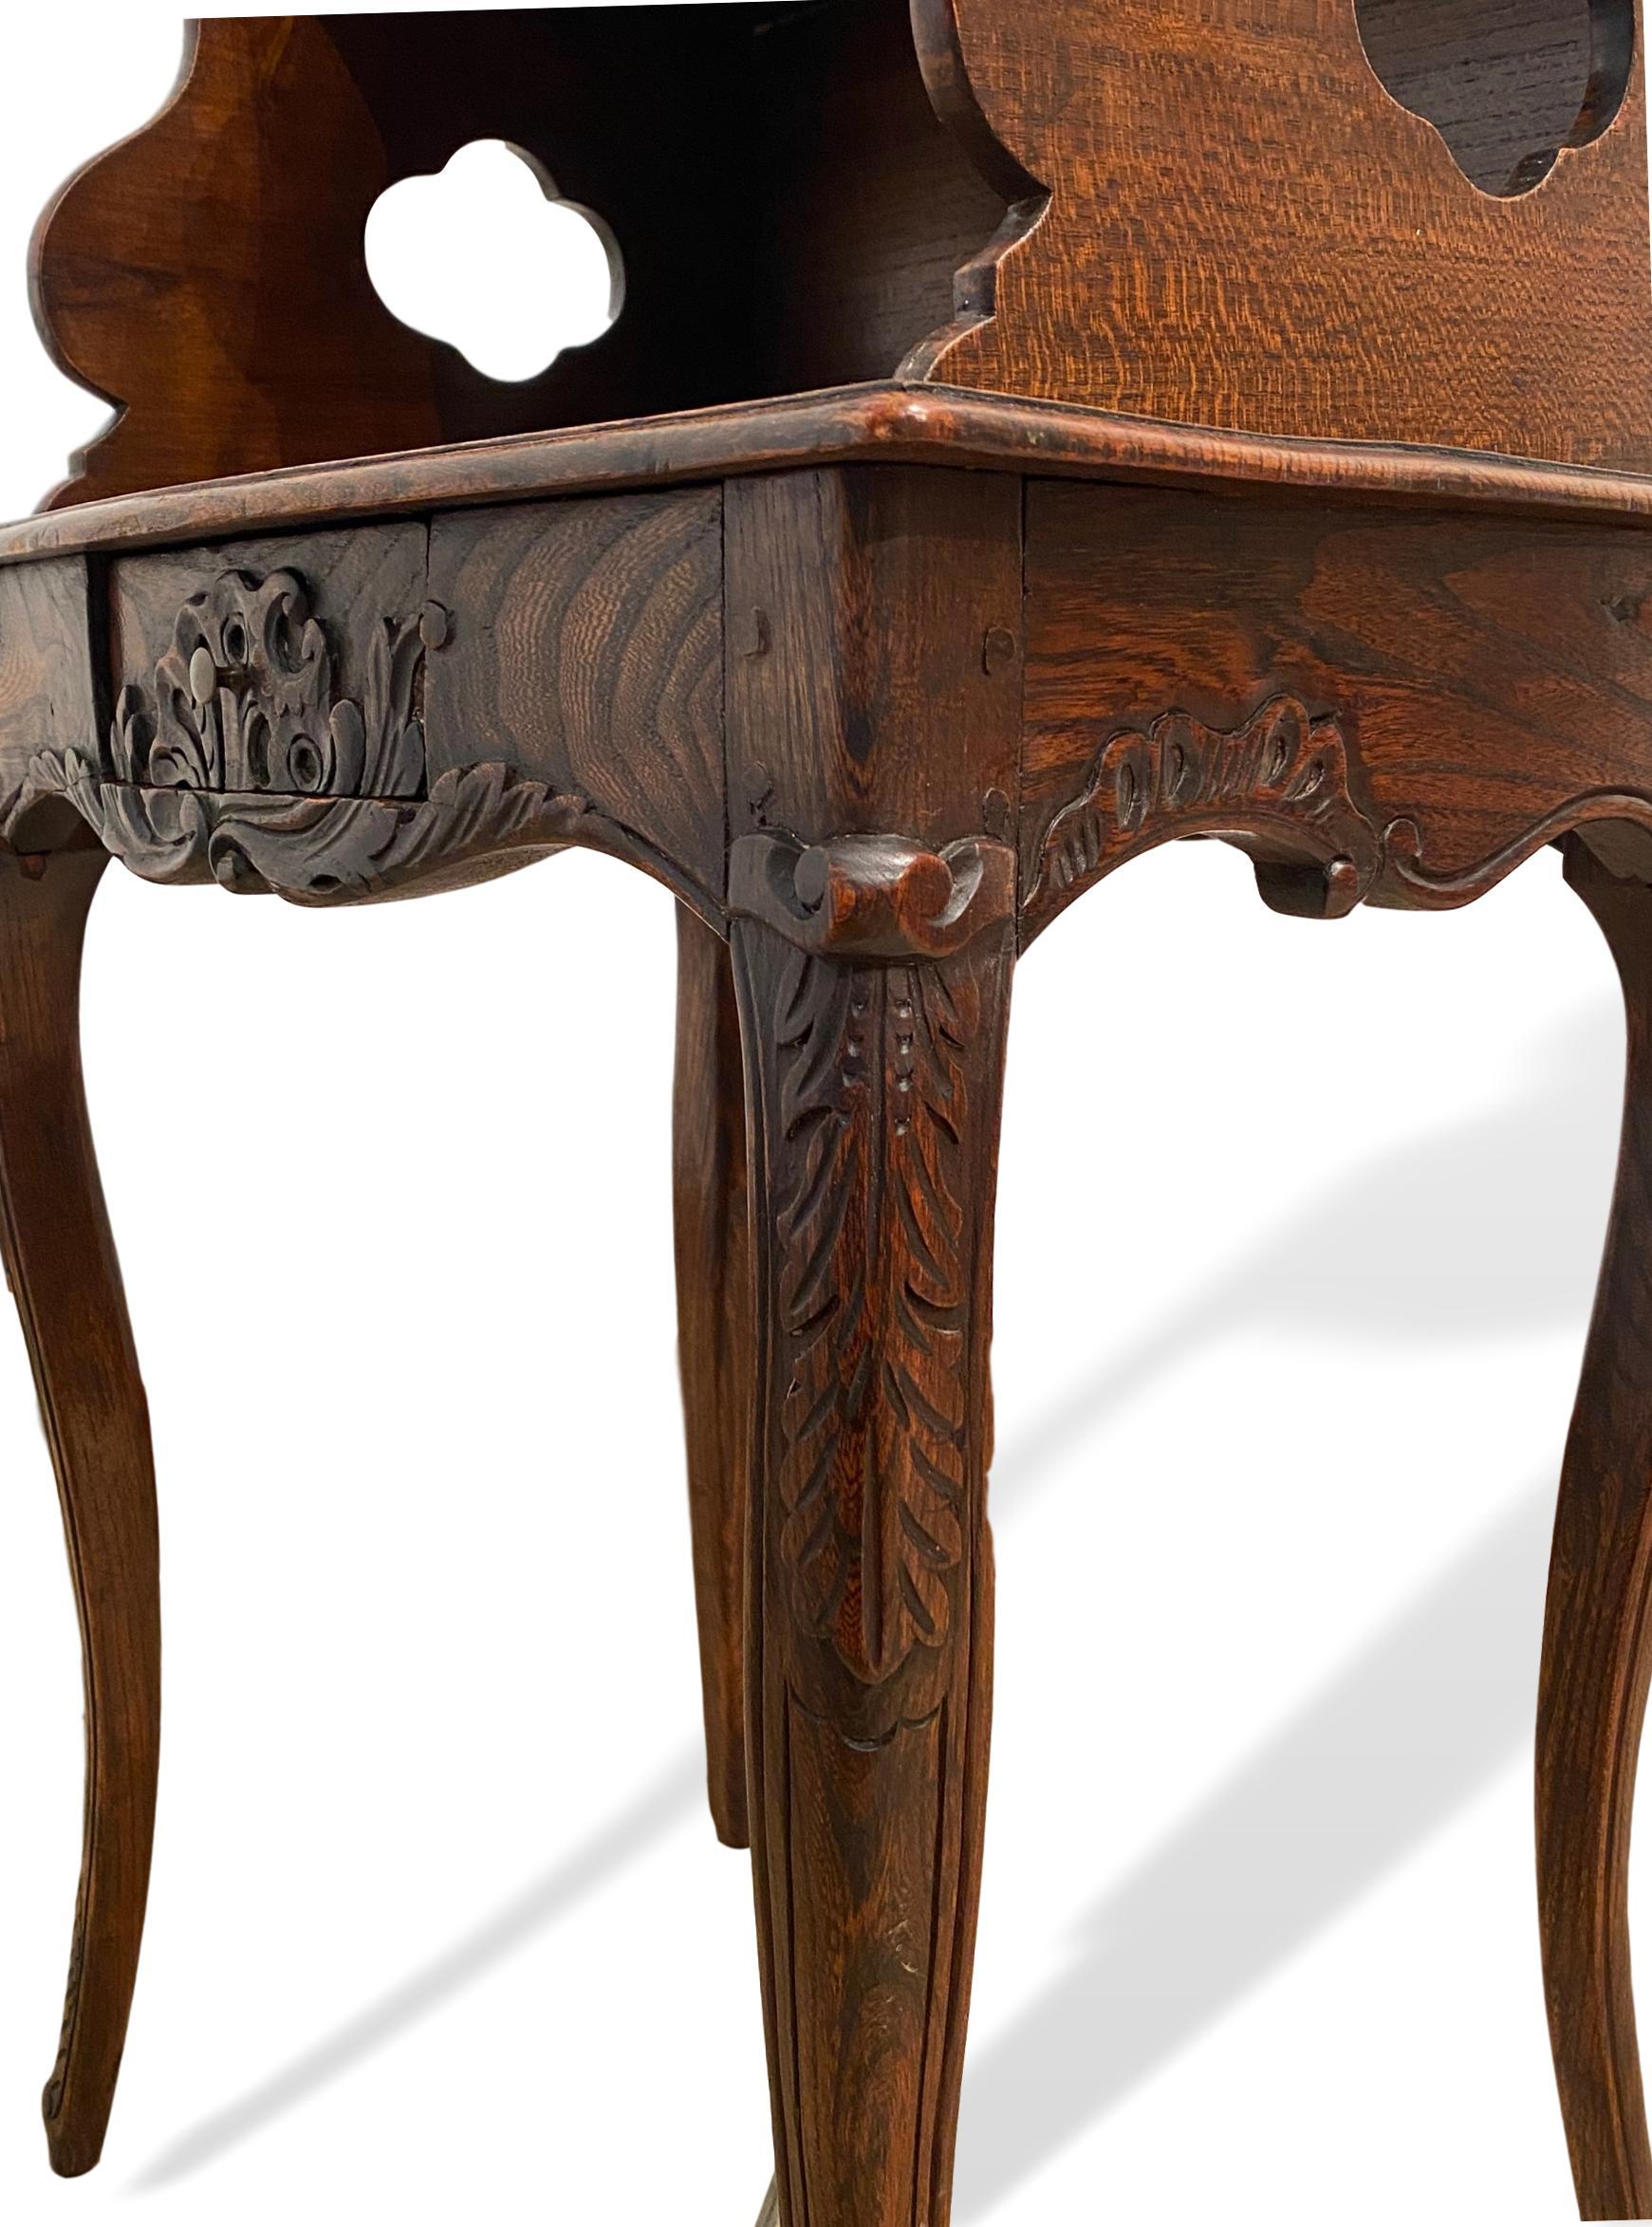 Elmwood Side Table with Gallery/Shelf, Pierced Quatrefoils, French, circa 1870 For Sale 1